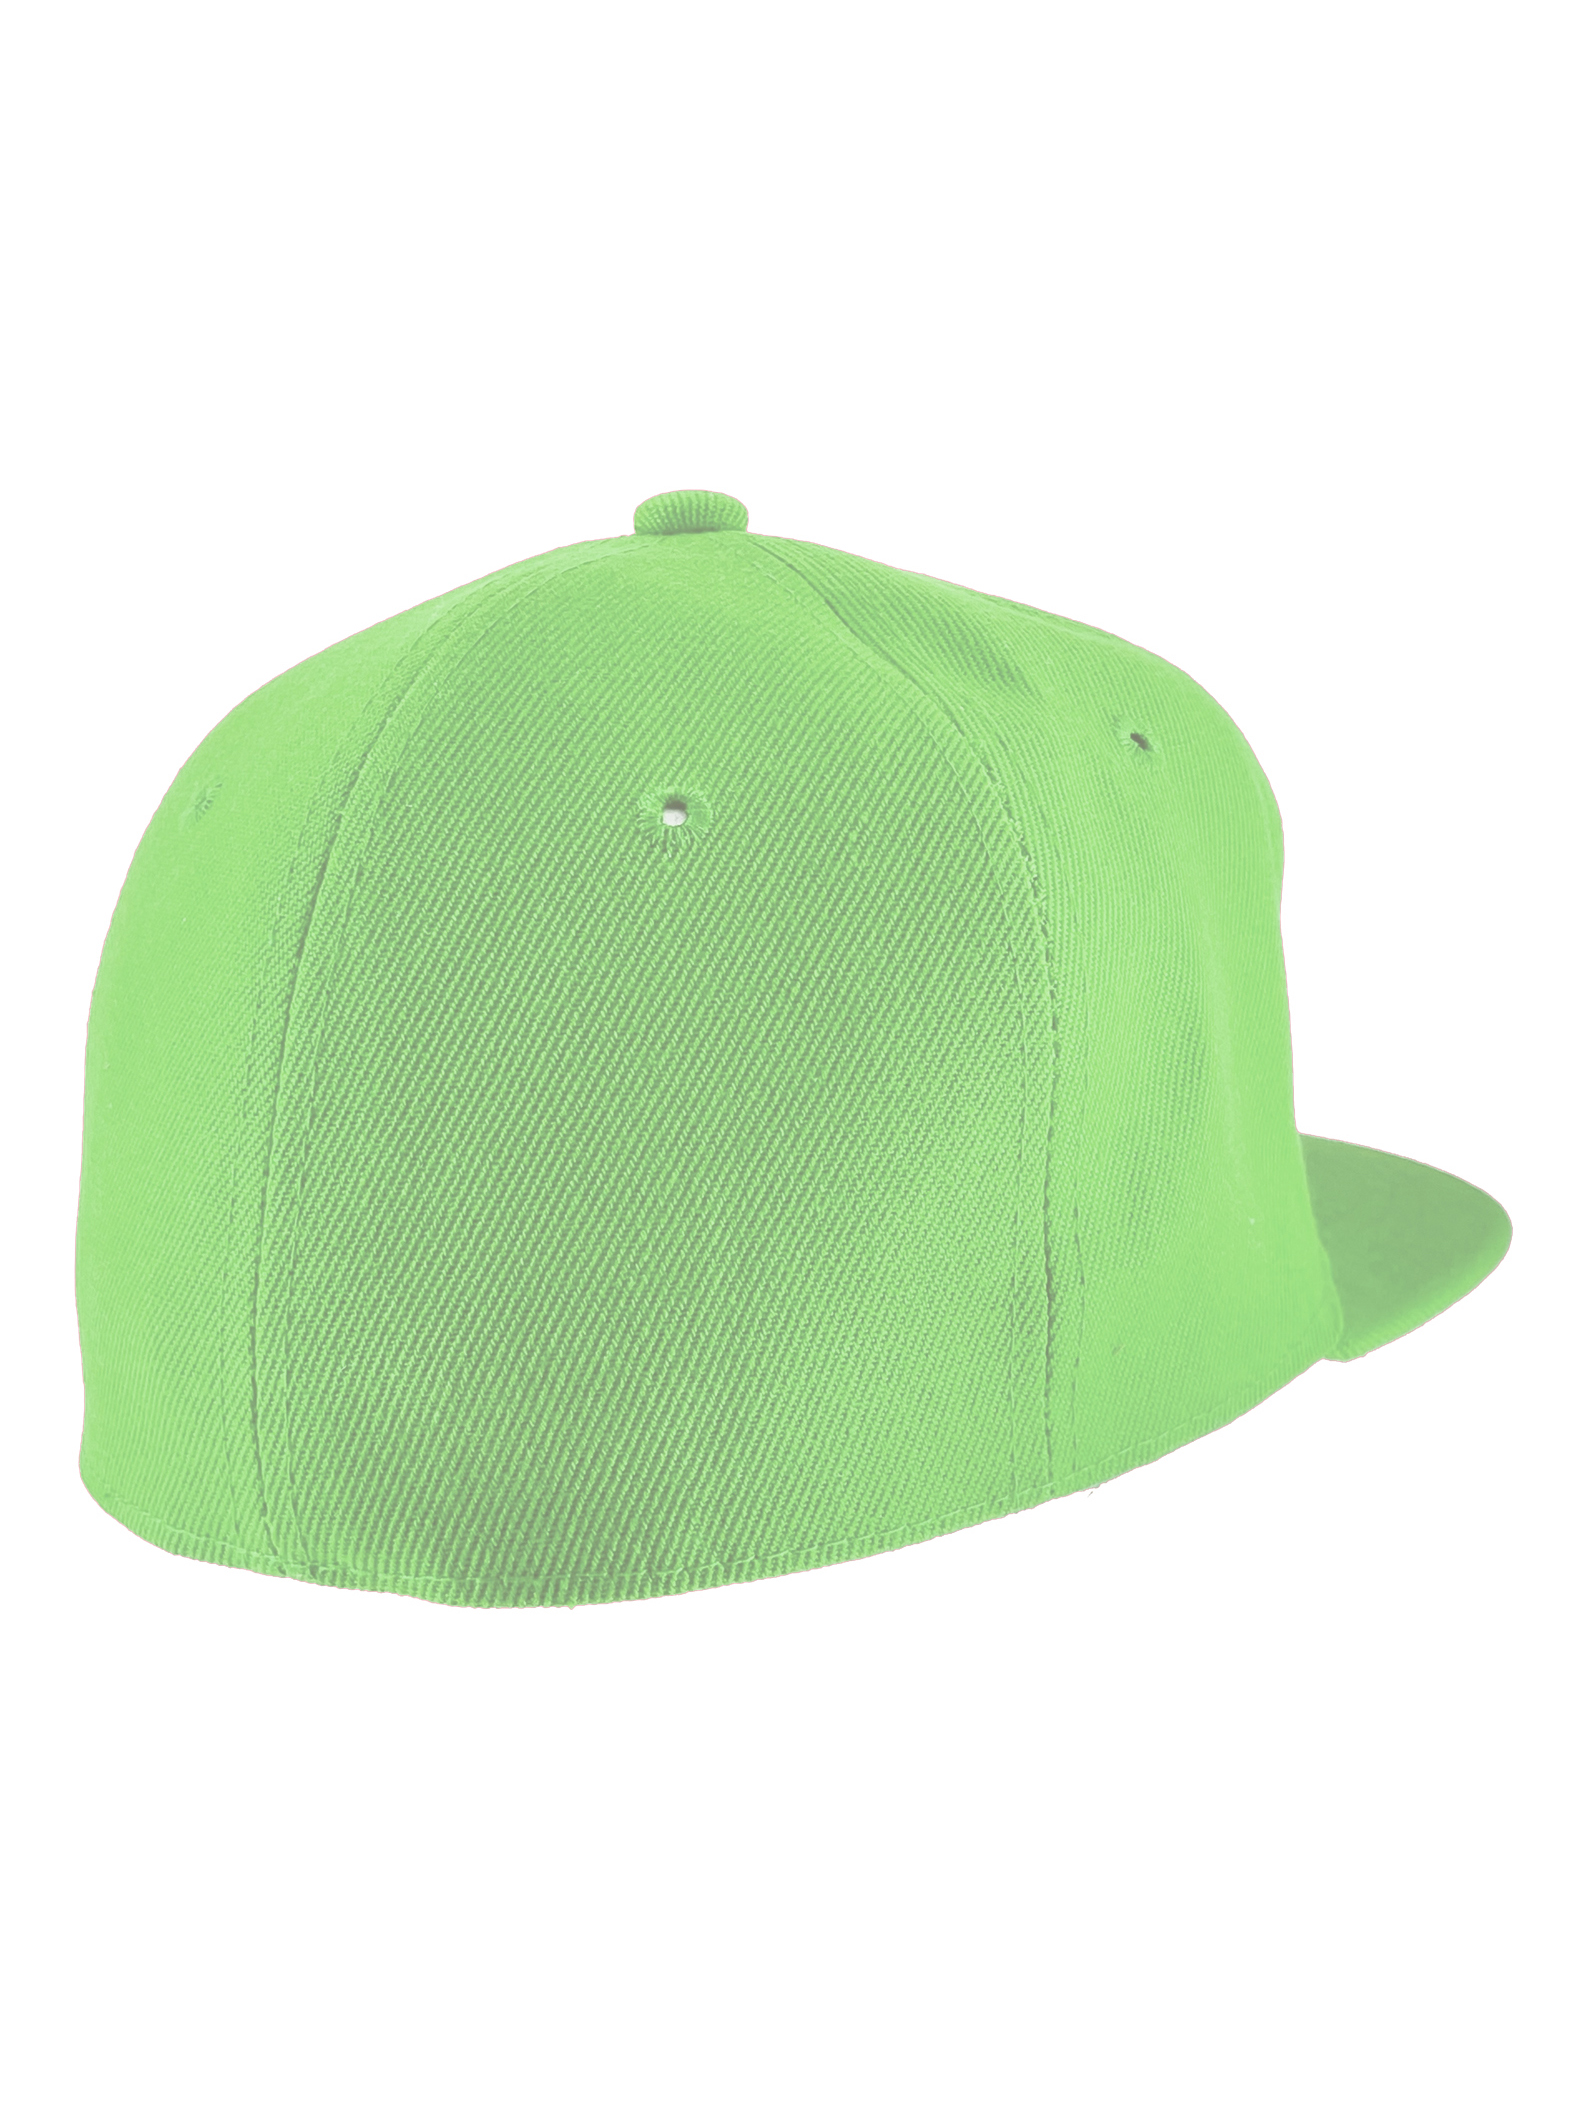 Top Headwear Plain Flat Bill Fitted Hat, Neon Green 7 3/8 - image 4 of 4